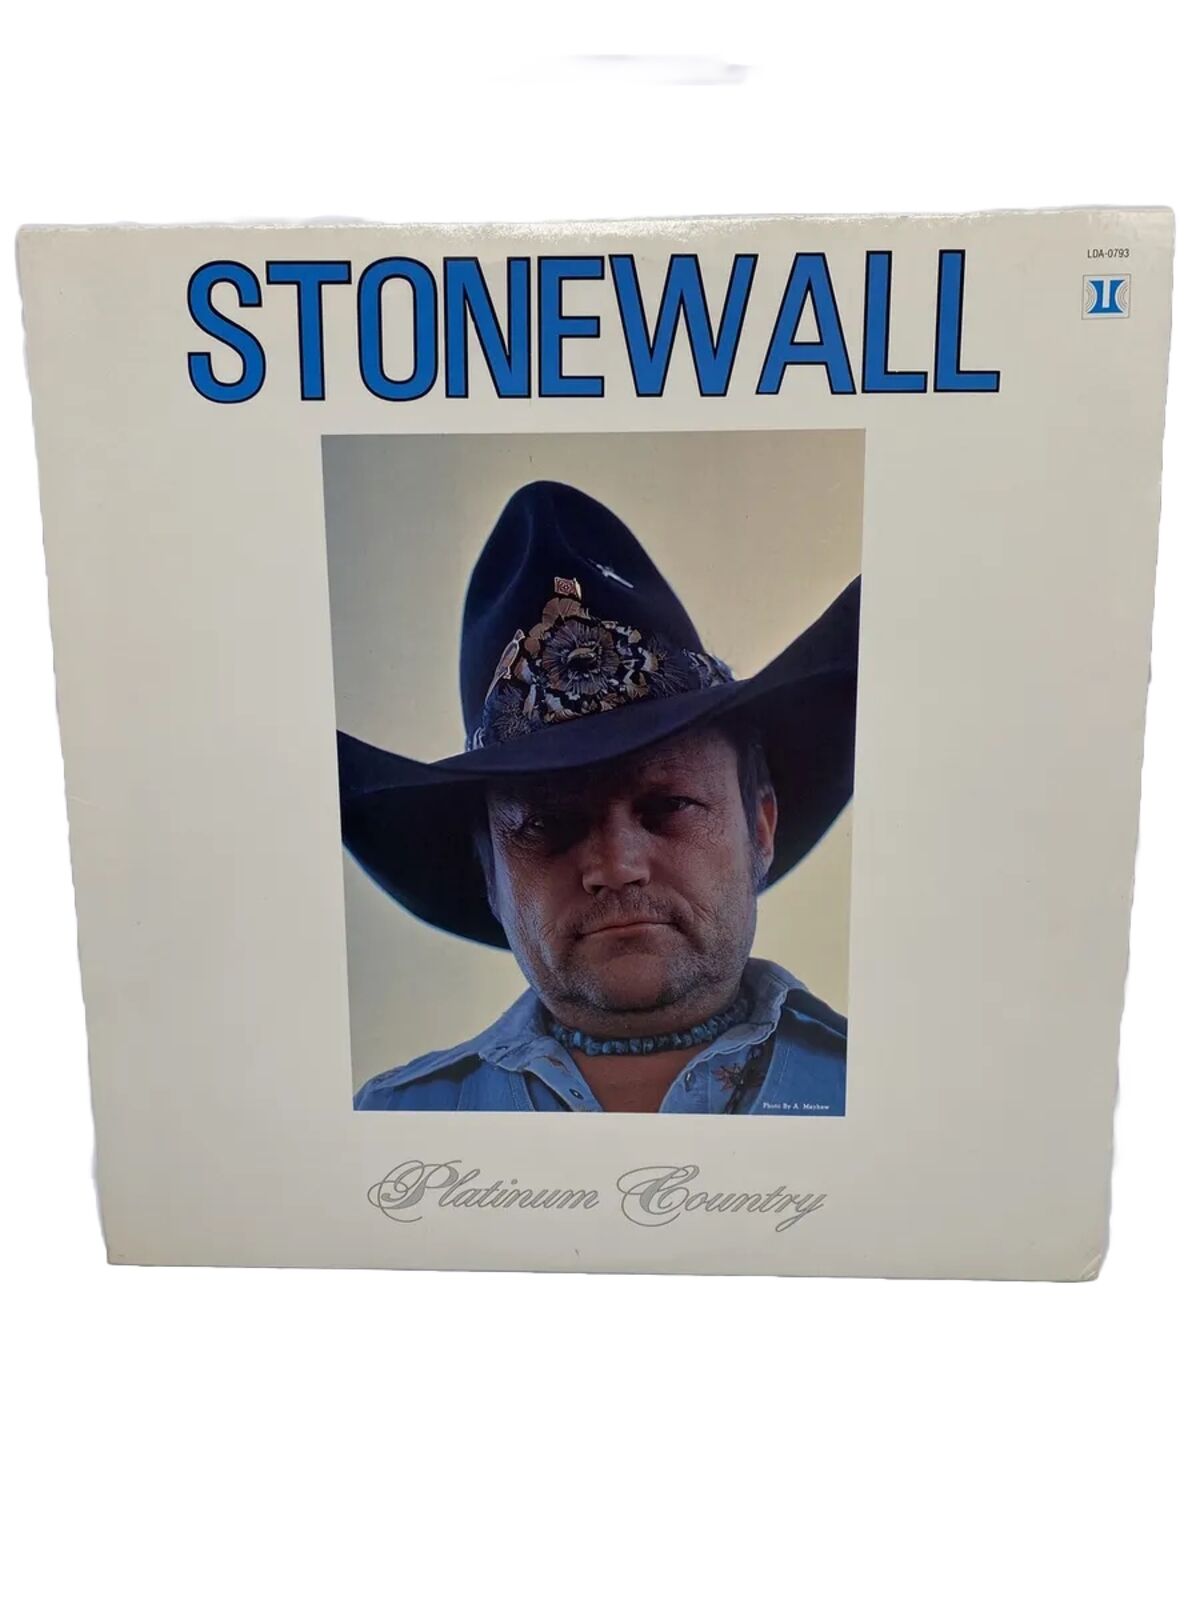 Stonewall Jackson Platinum Country 1979 Vinyl LP Little Darlin’ Records LDA-0793